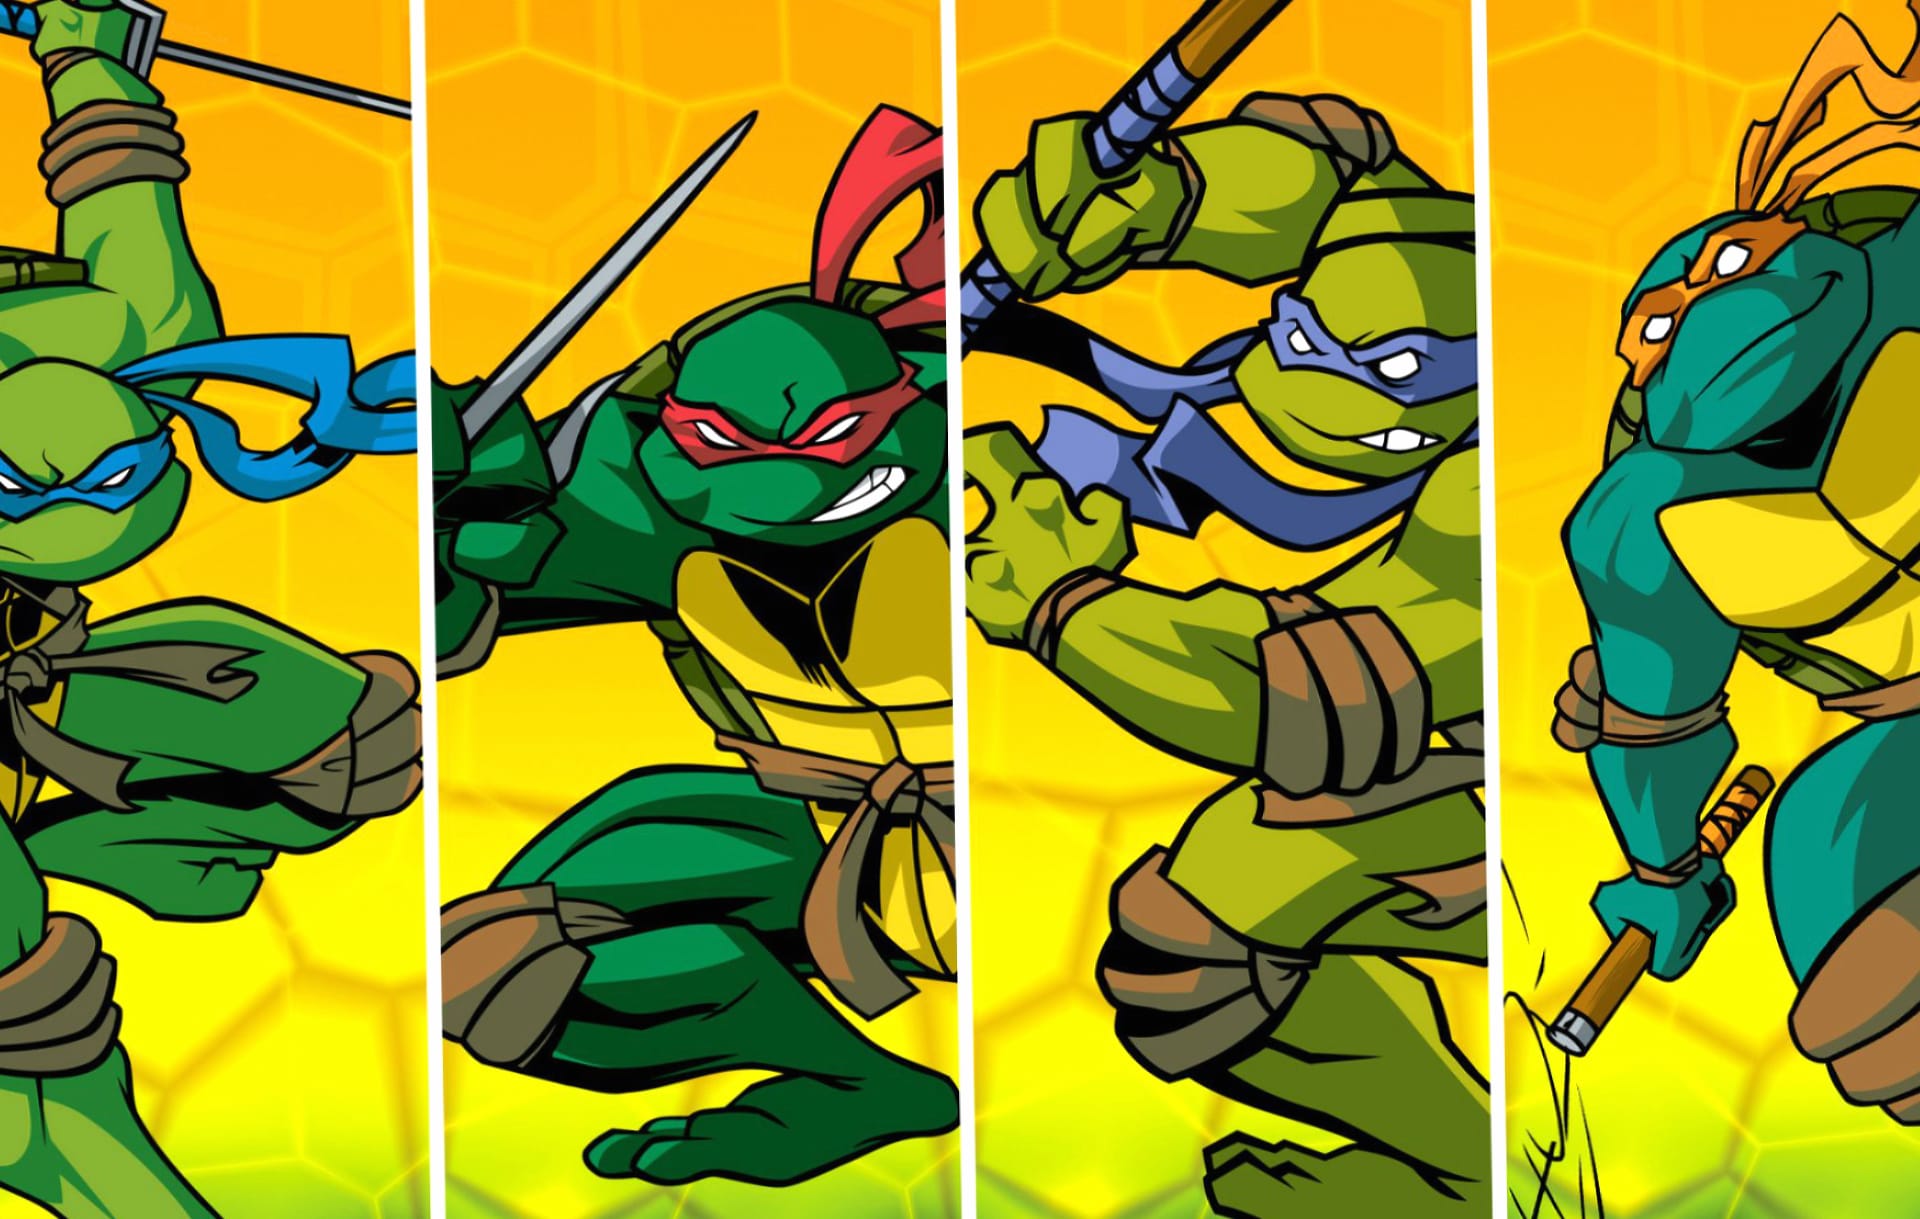 Teenage Mutant Ninja Turtles (2003) at 1024 x 1024 iPad size wallpapers HD quality